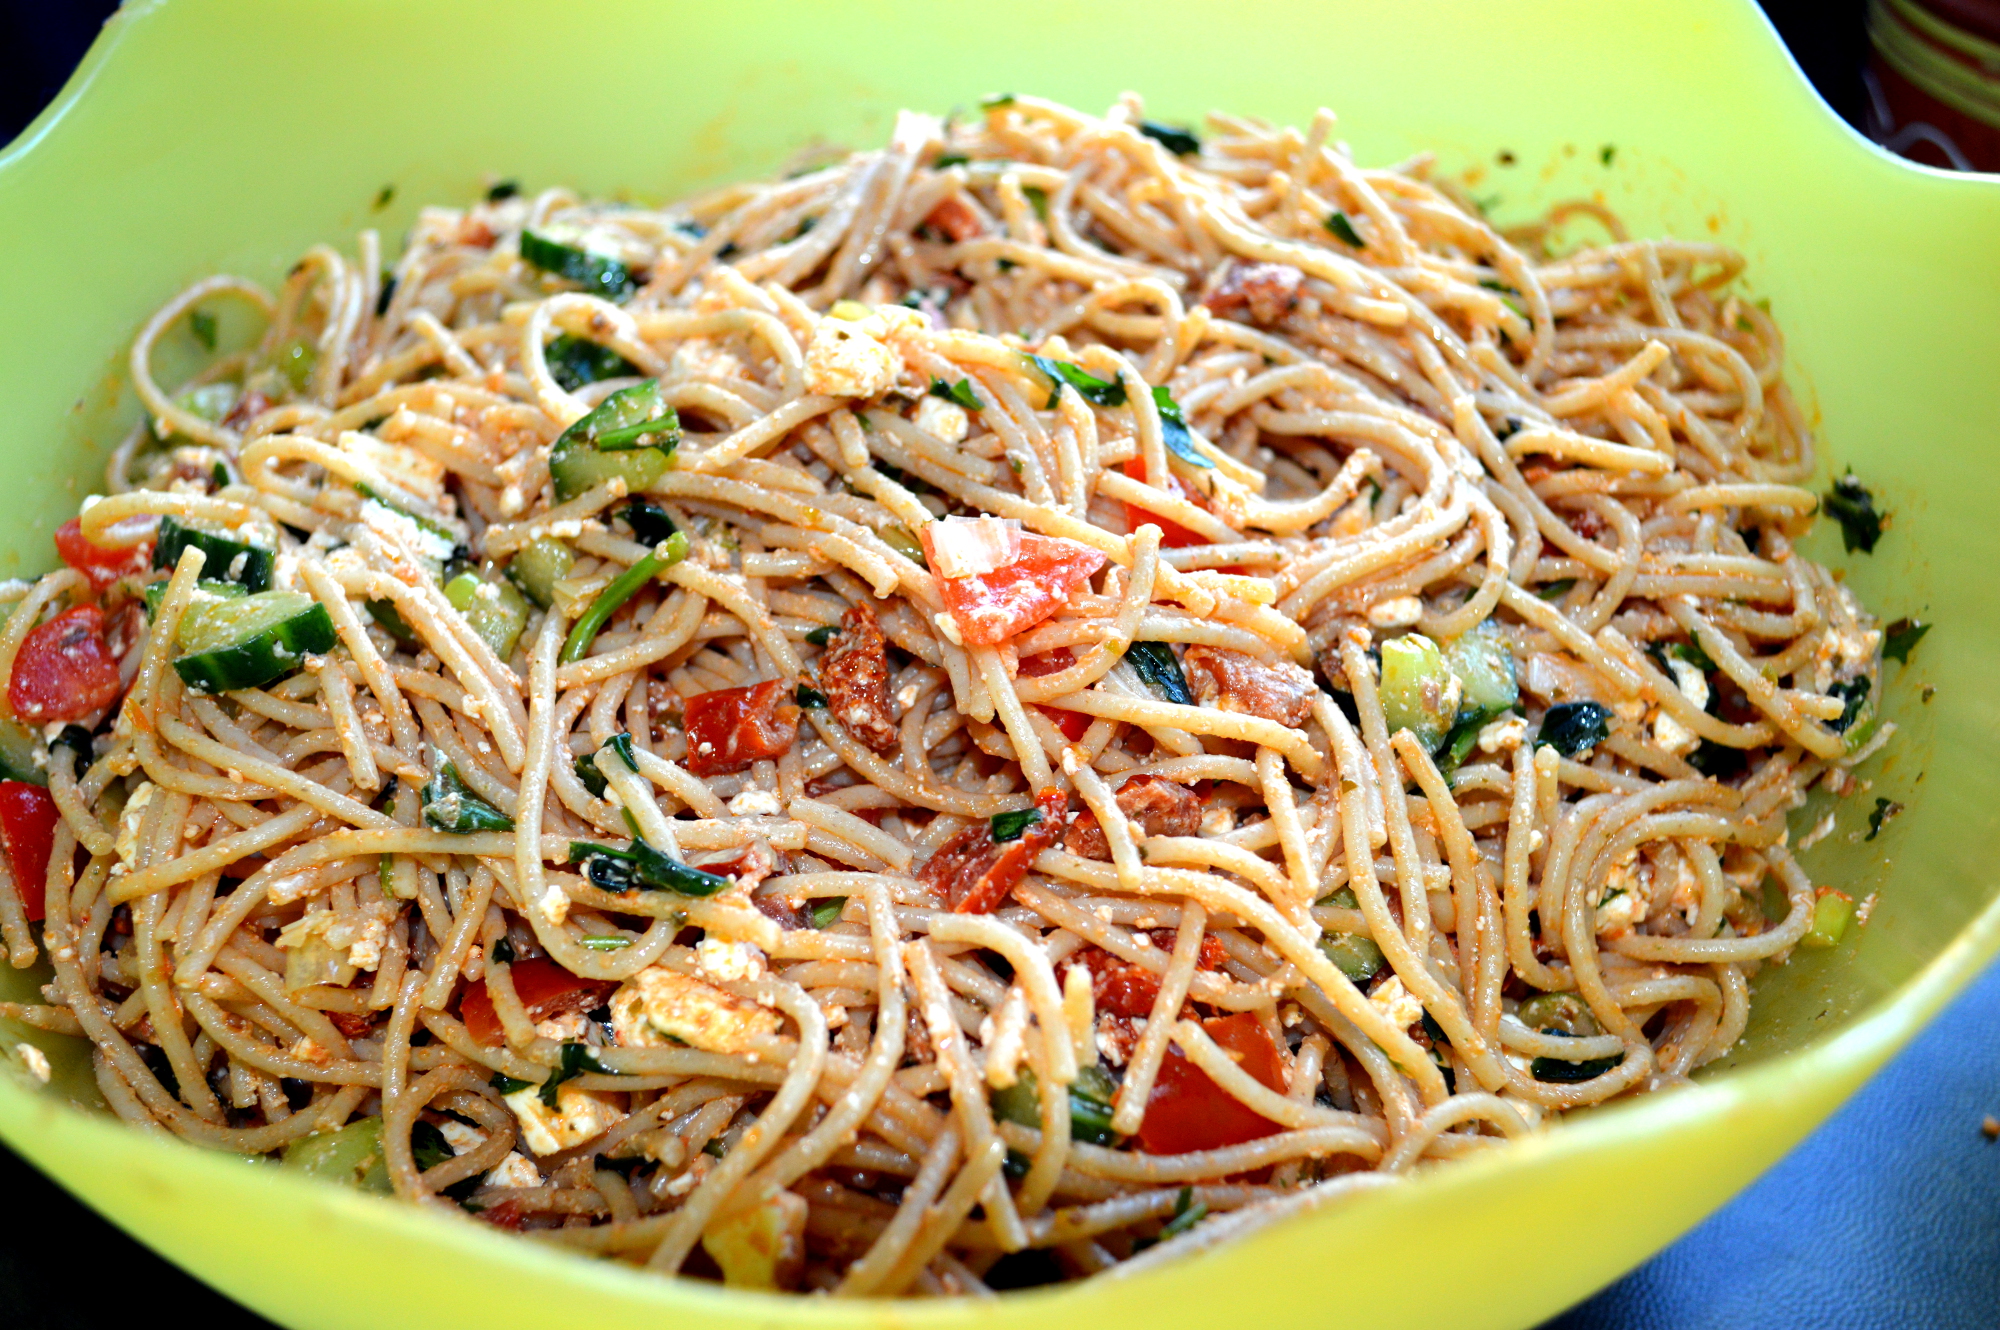 nudelsalat mit spaghetti — rezepte suchen